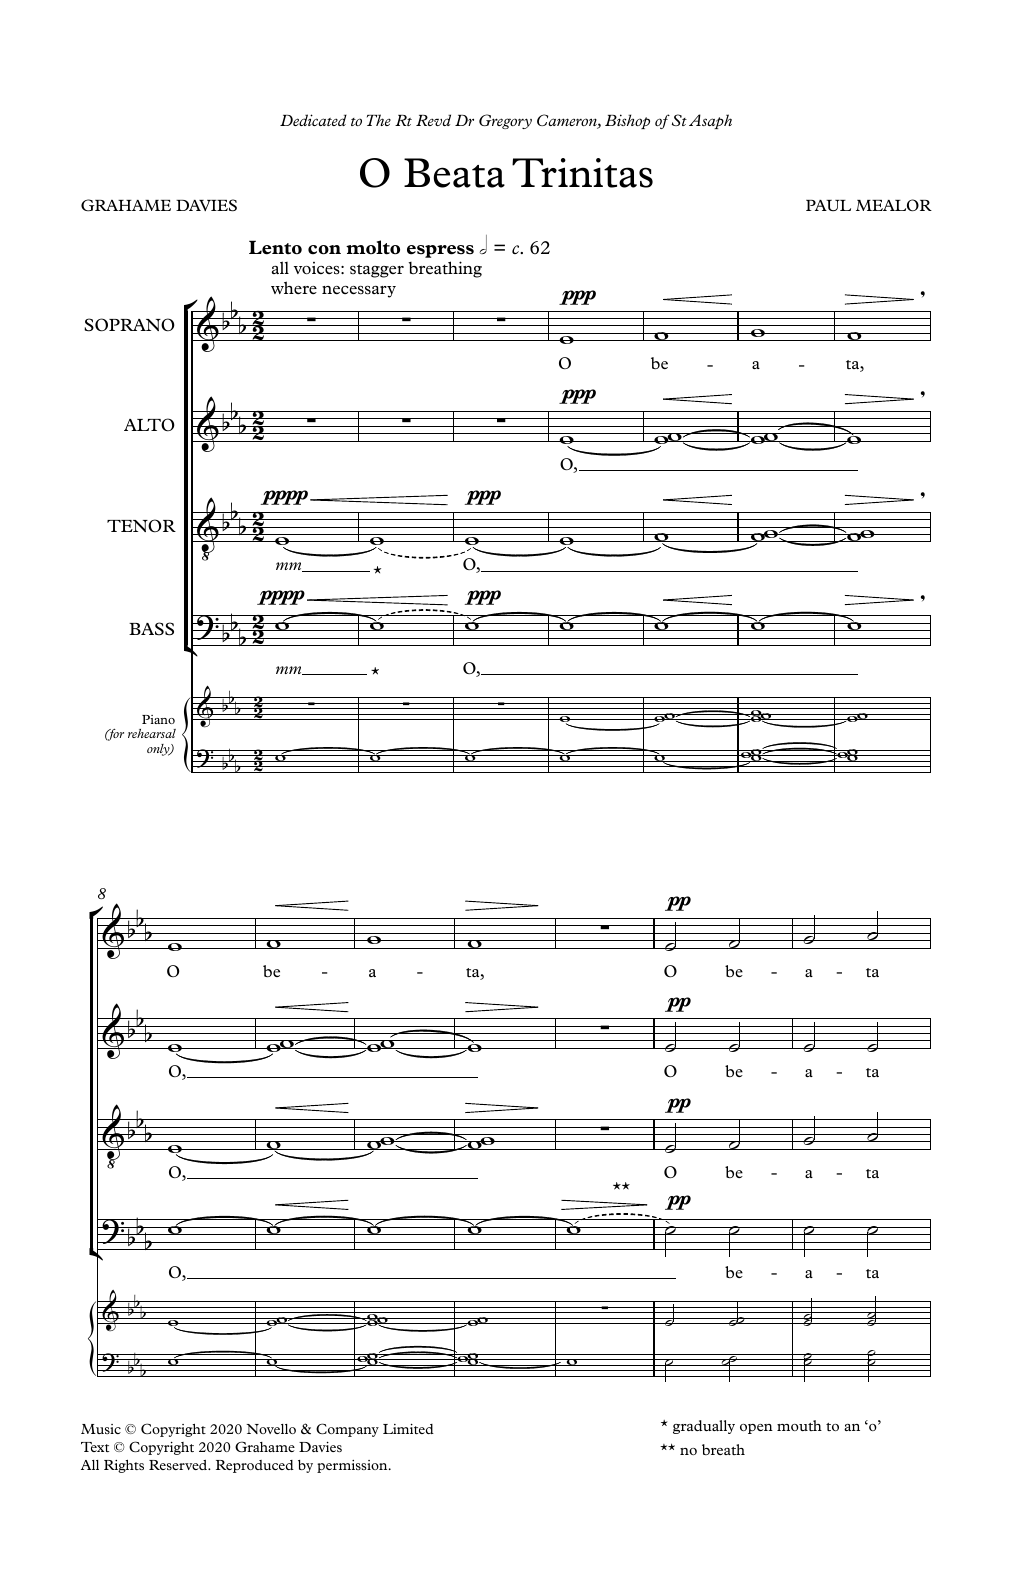 Paul Mealor O Beata Trinitas Sheet Music Notes & Chords for SATB Choir - Download or Print PDF